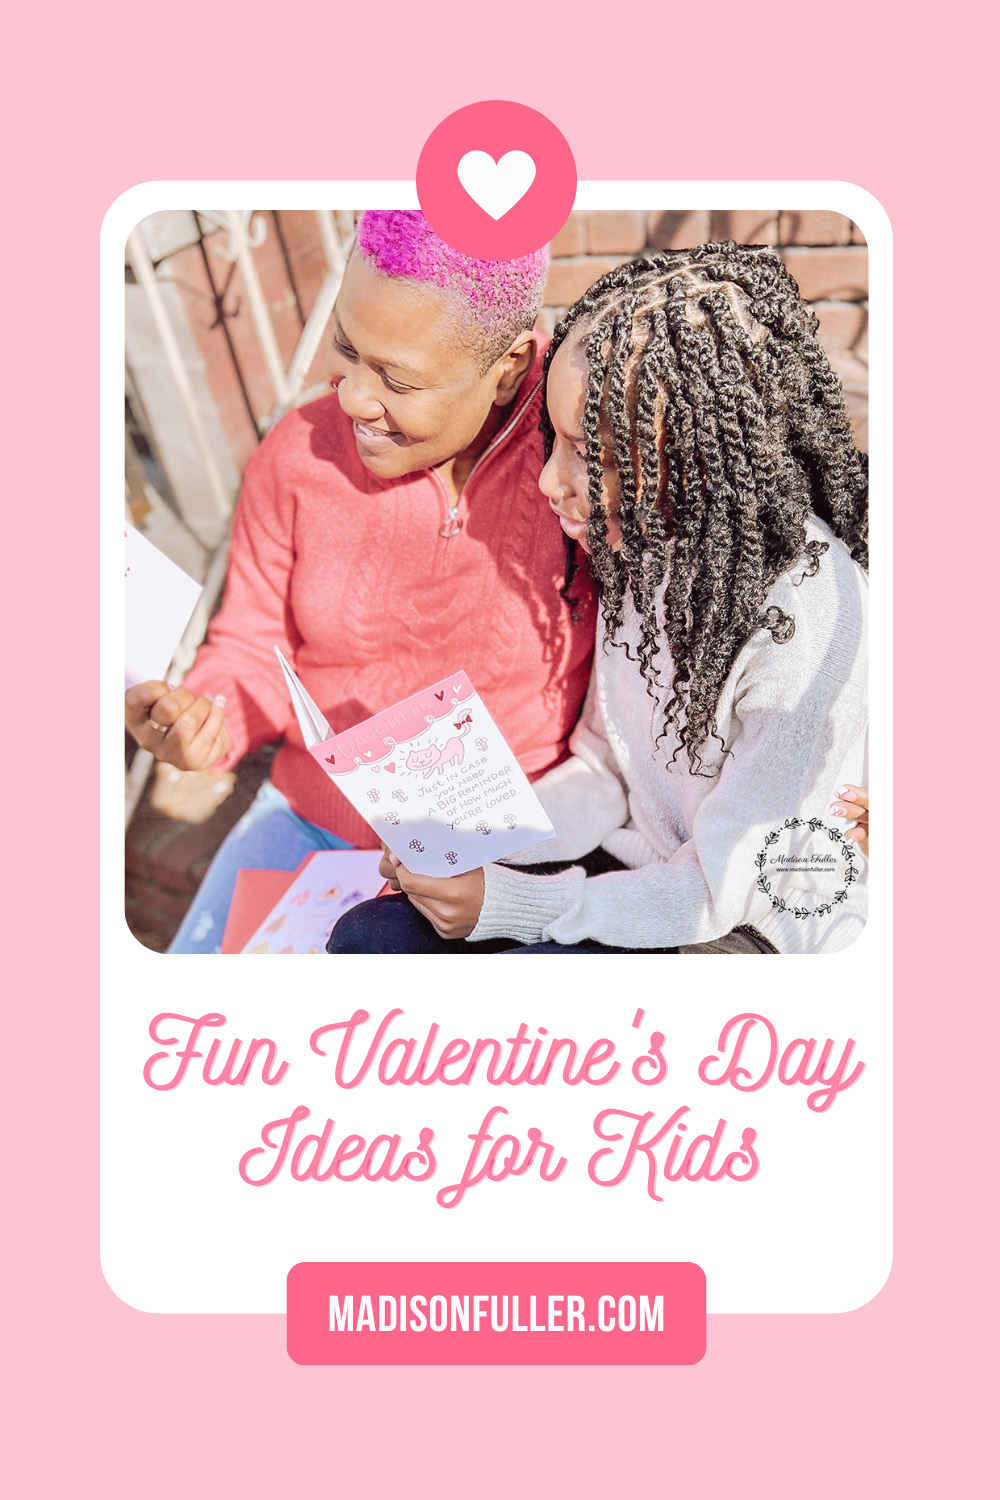 Fun Valentine's Day Ideas for Kids